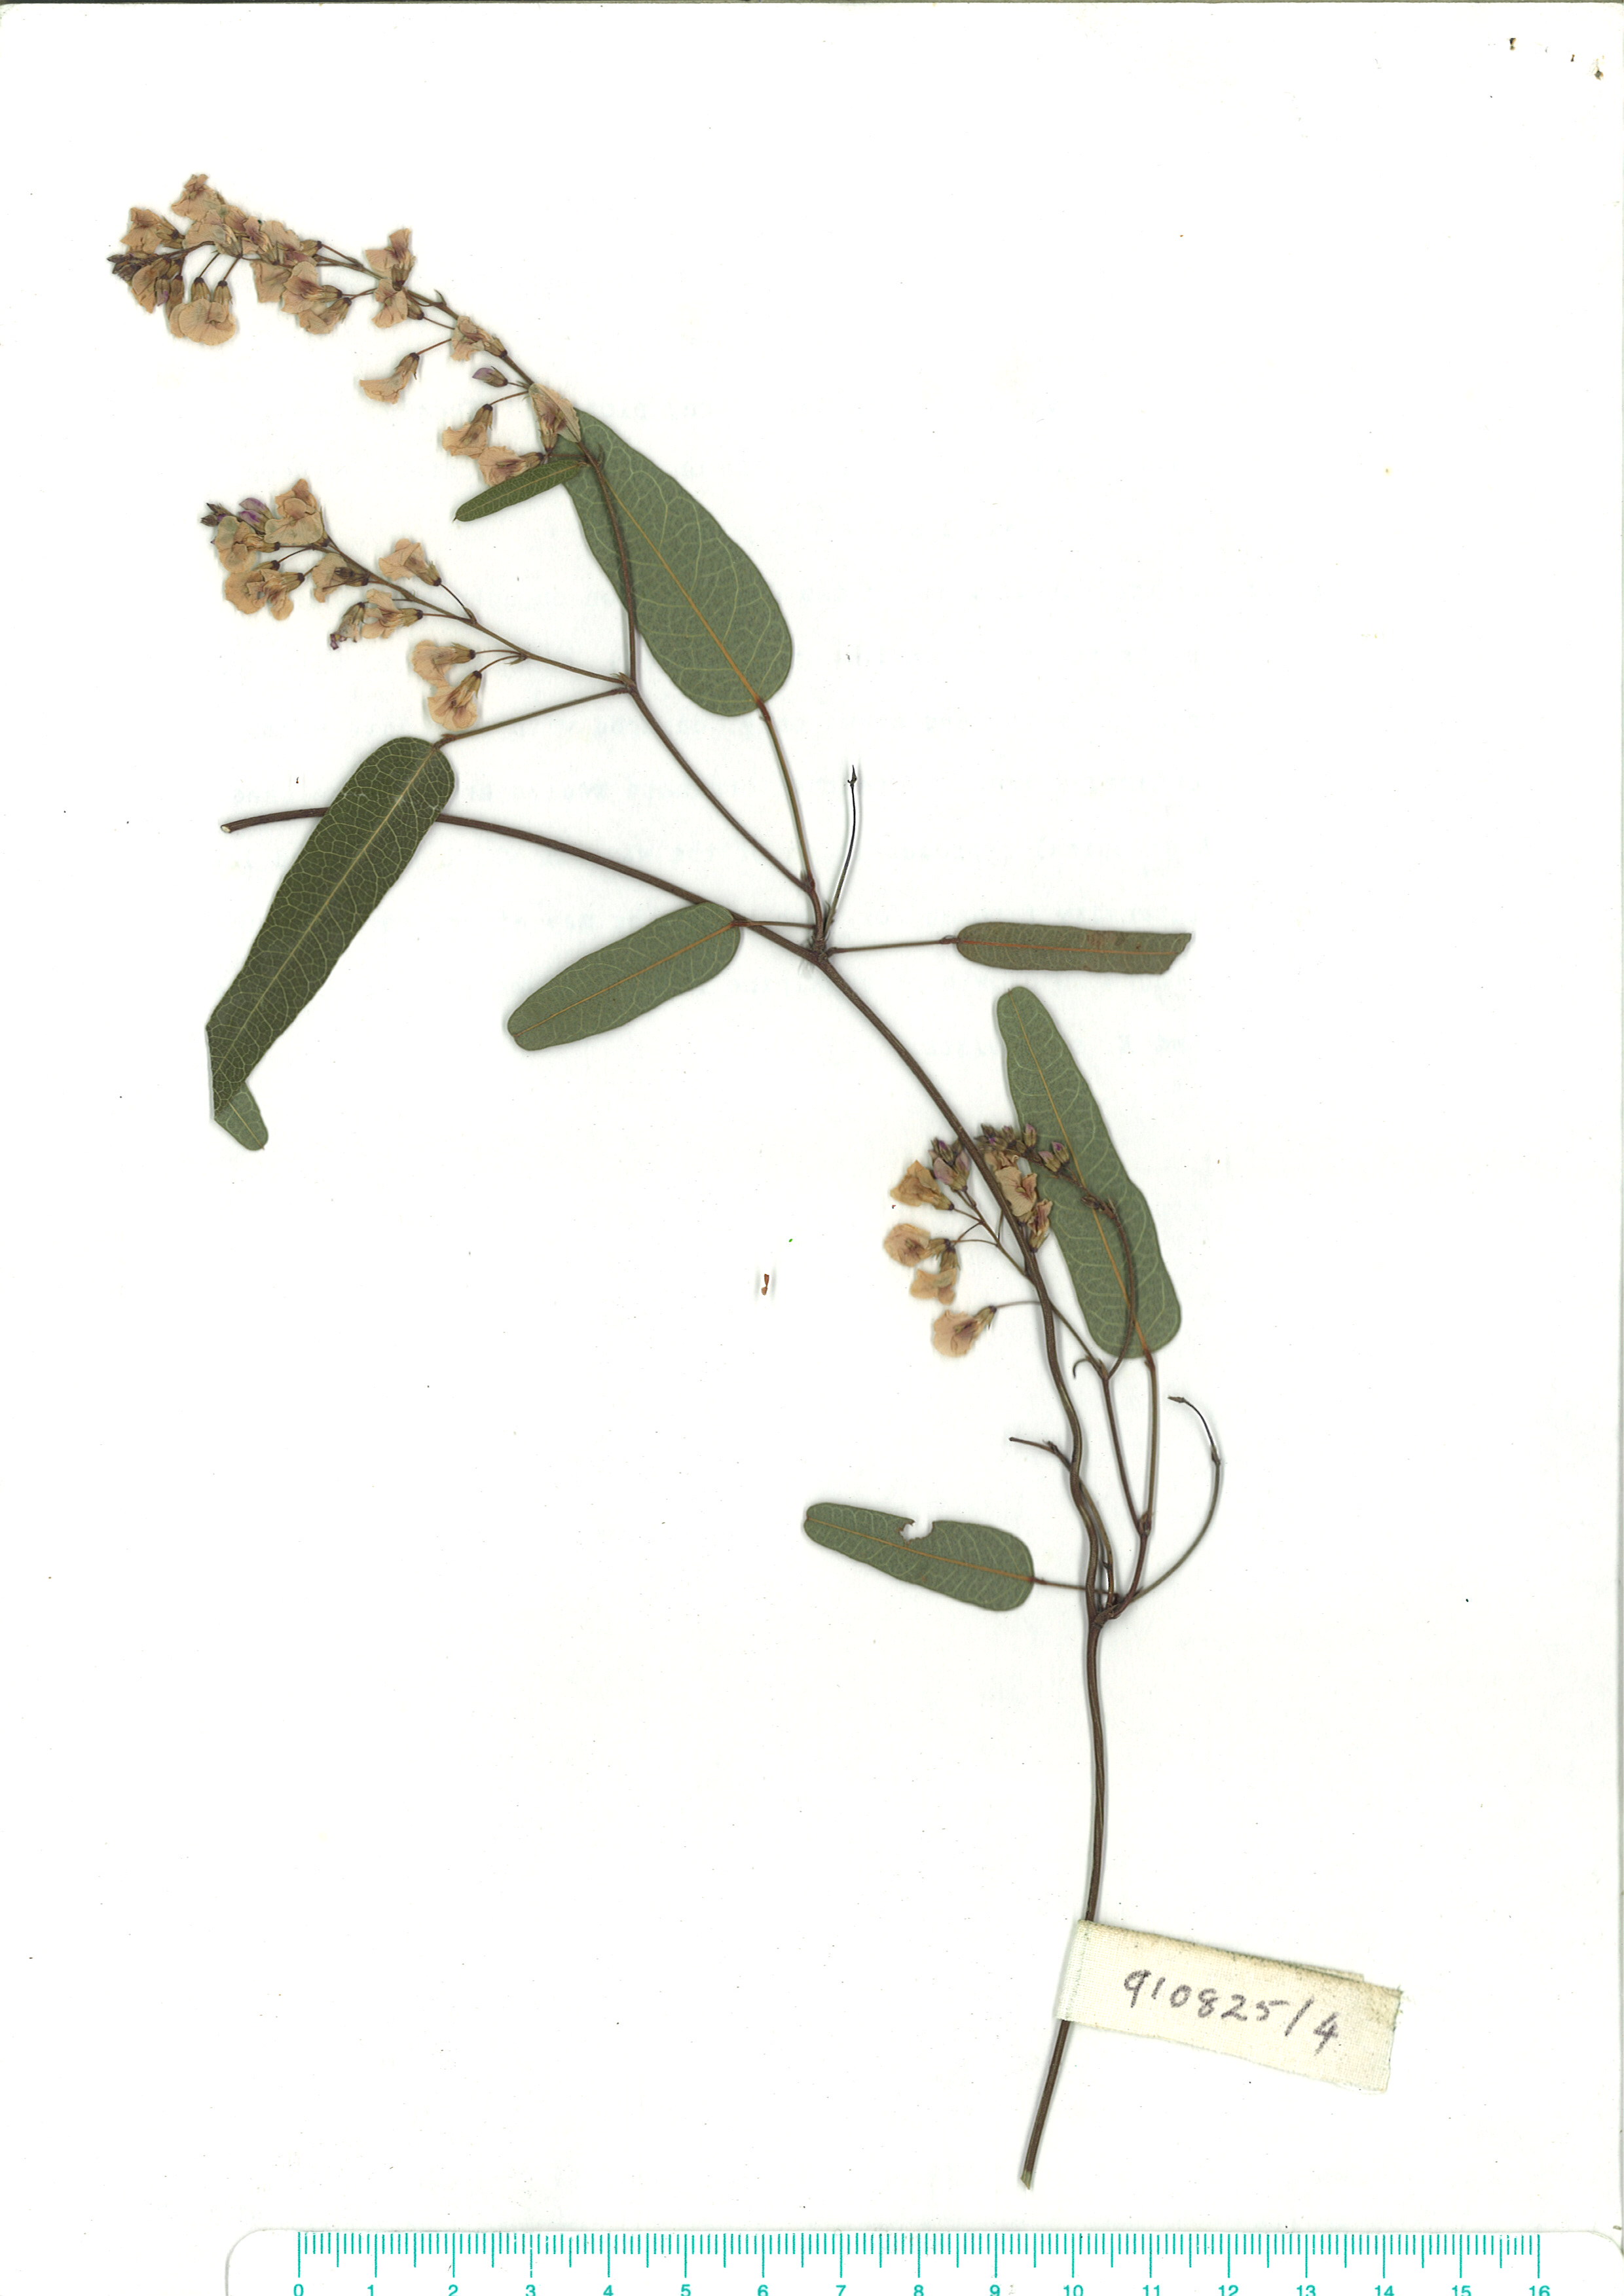 Scanned herbarium image of Hardenbergia violacea